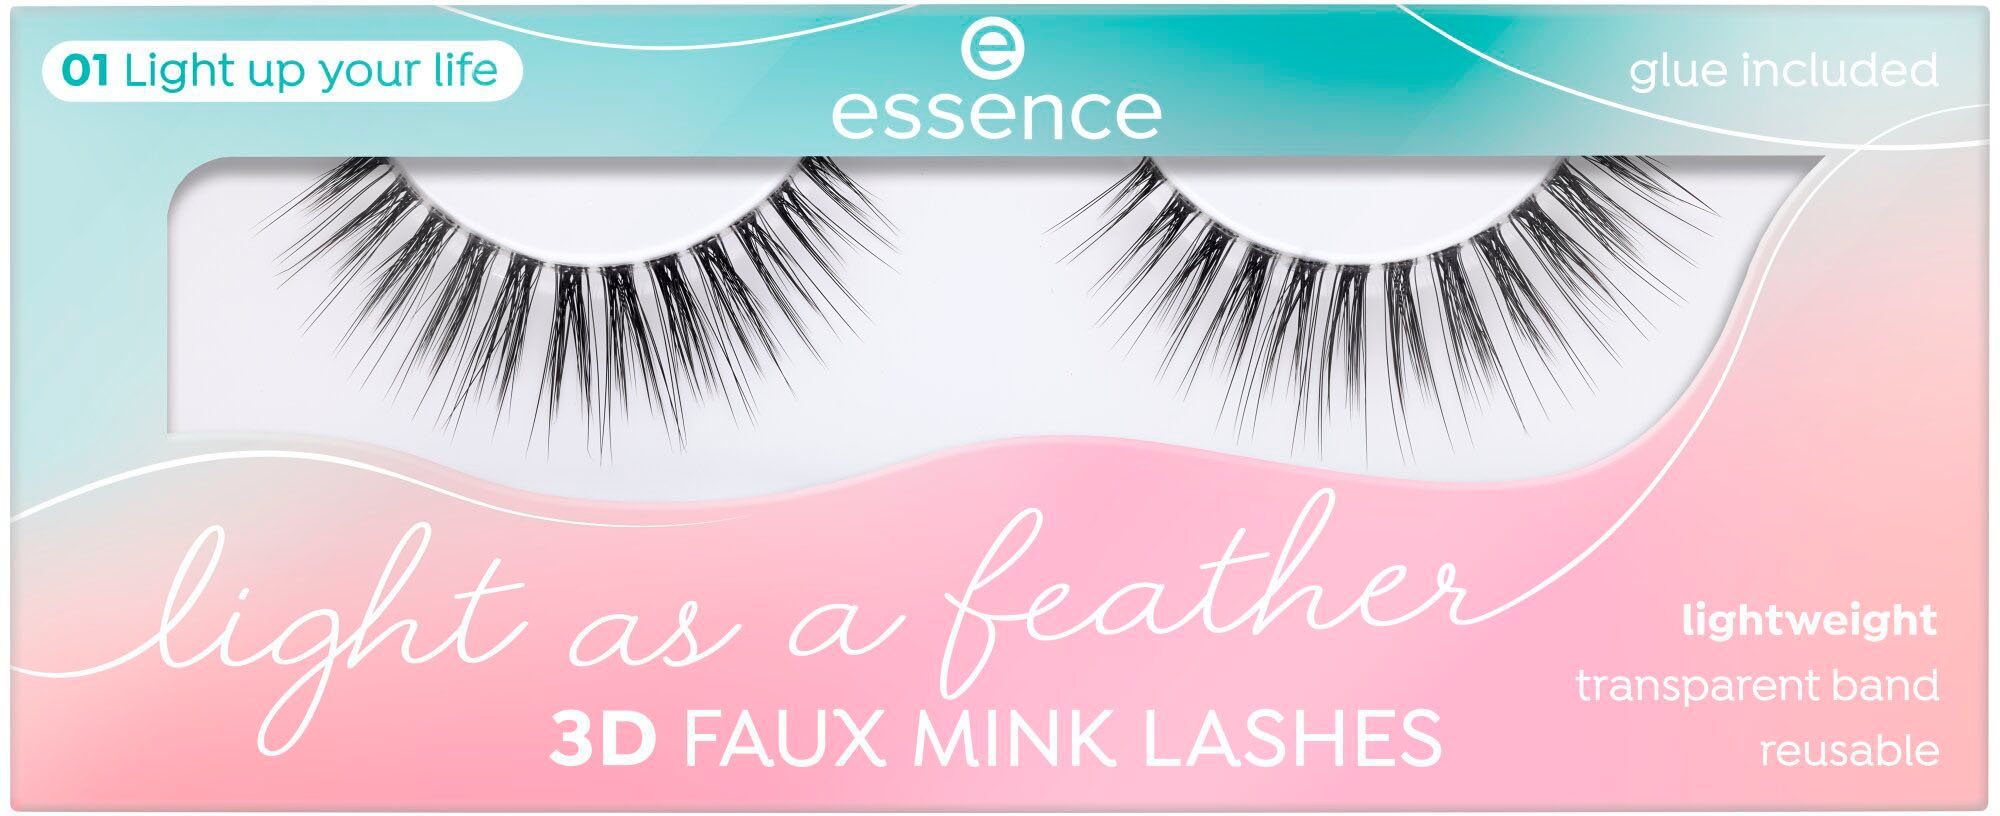 Essence Light a feather as tlg. 3D 3 faux lashes, Set, mink Bandwimpern